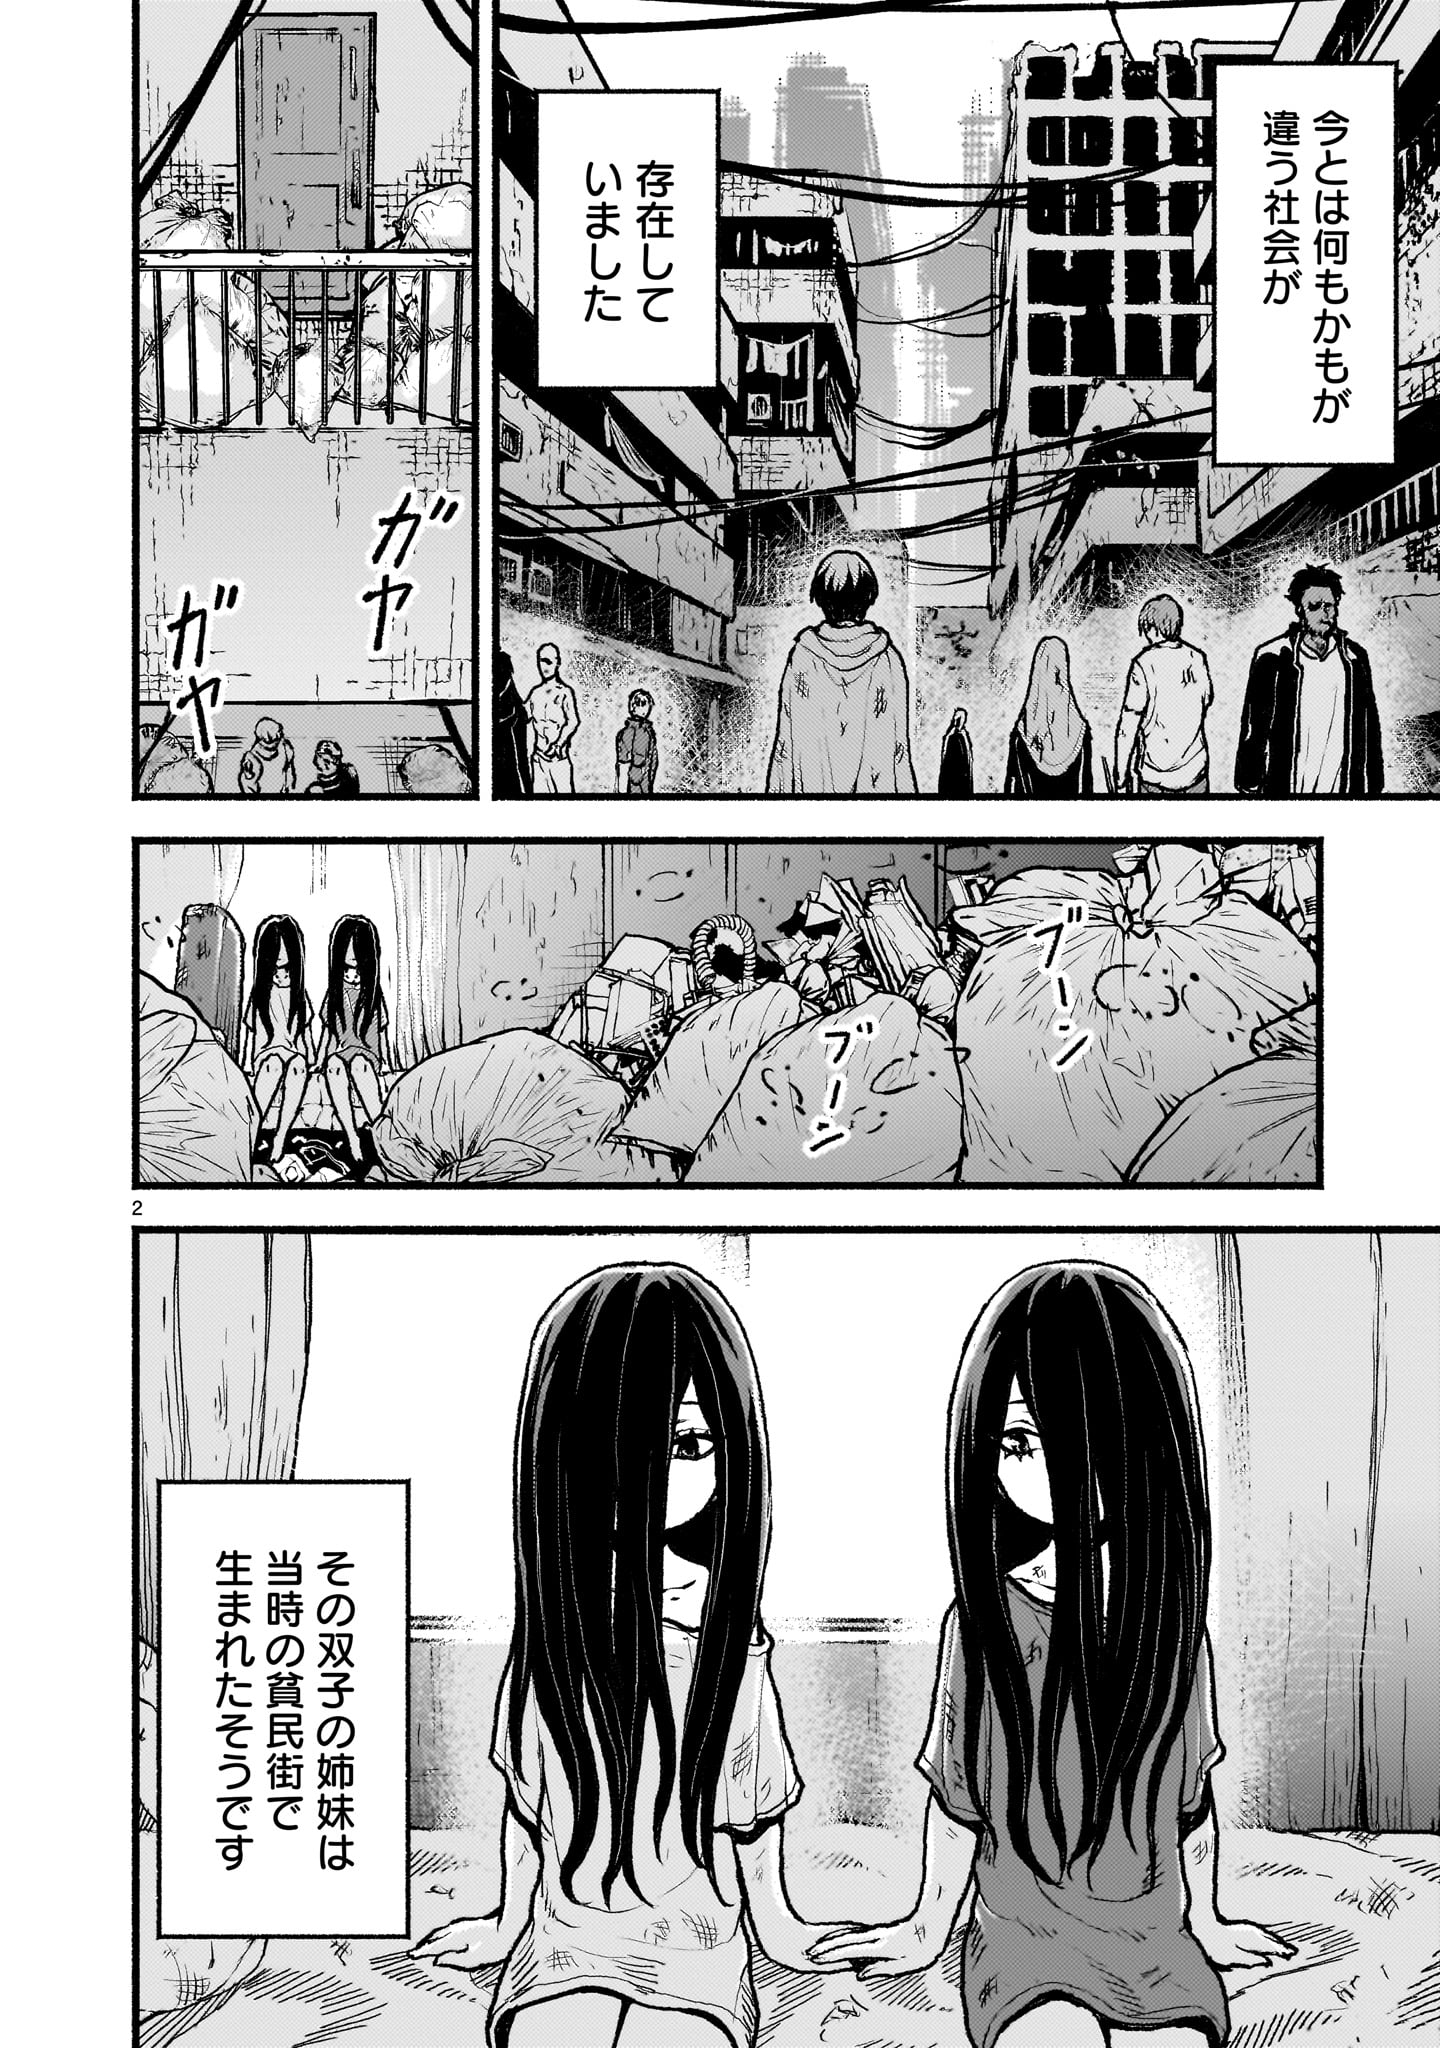 Kaminaki Sekai no Kamisama Katsudou - Chapter 50 - Page 2